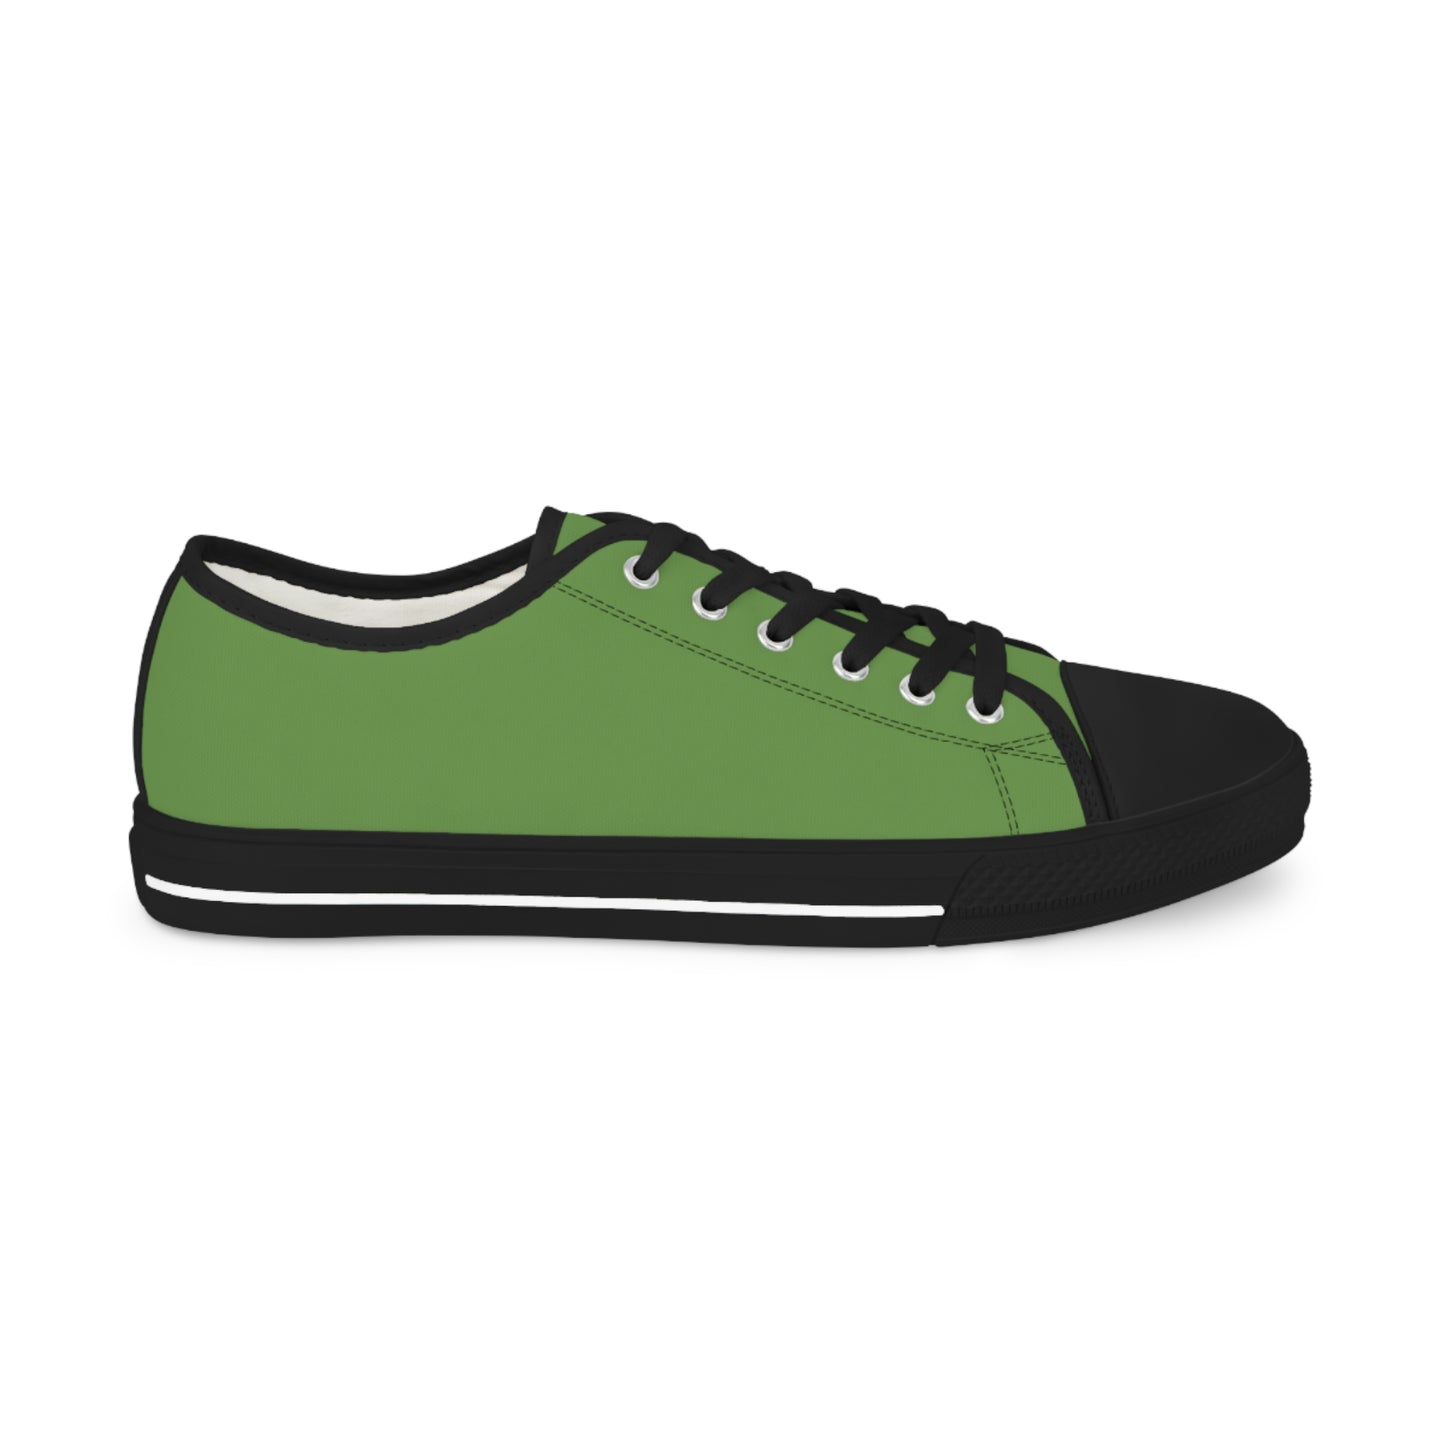 Men's Low Top Sneakers - Dark Olive US 14 Black sole